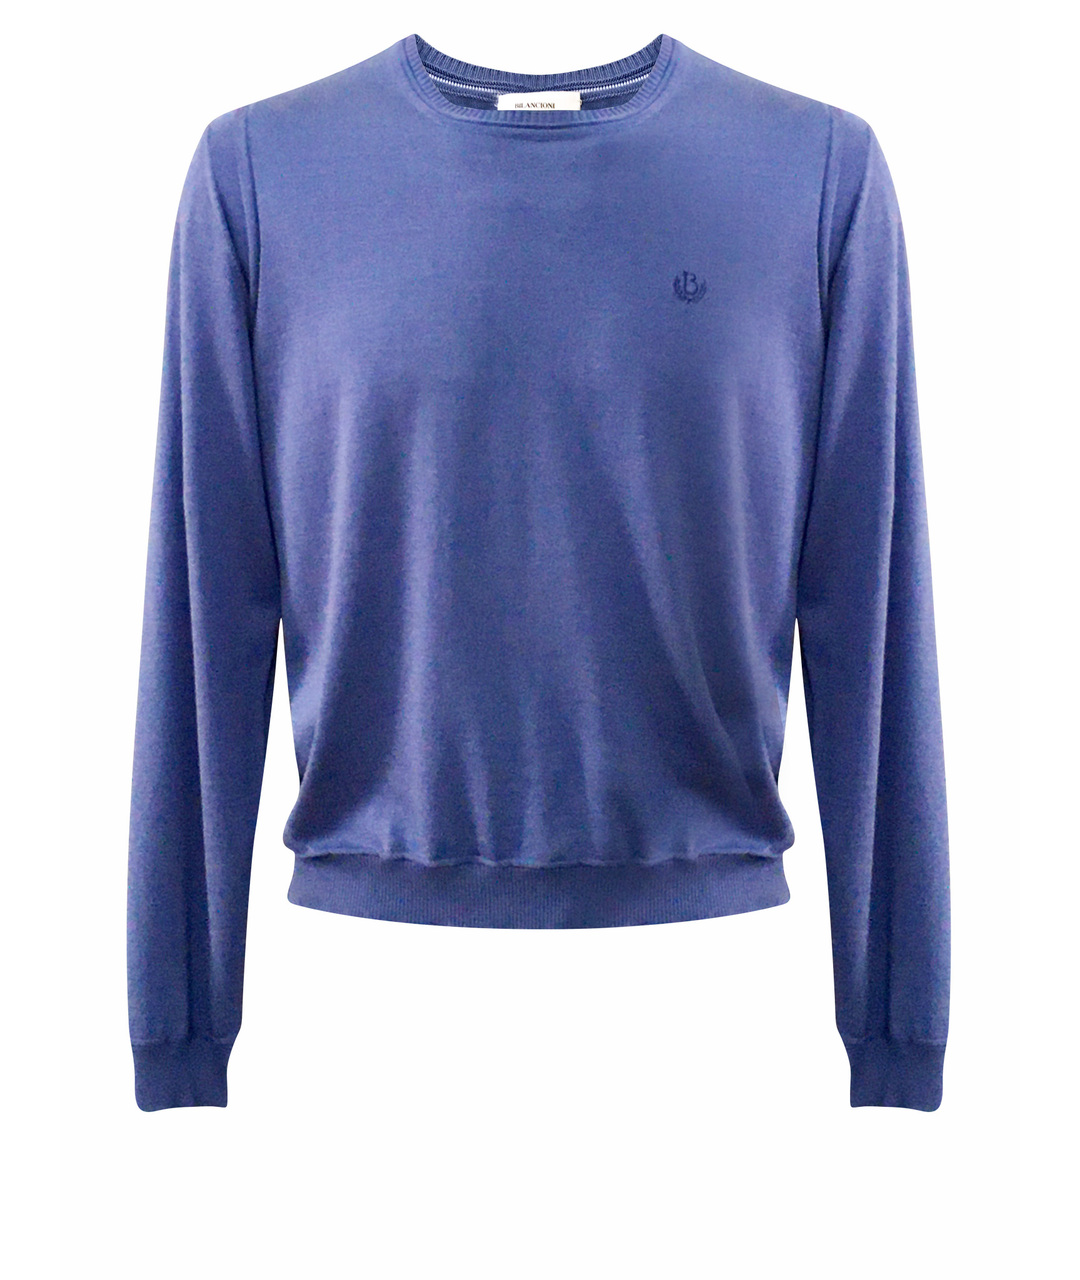 BILANCIONI Синий шелковый джемпер / свитер, фото 1